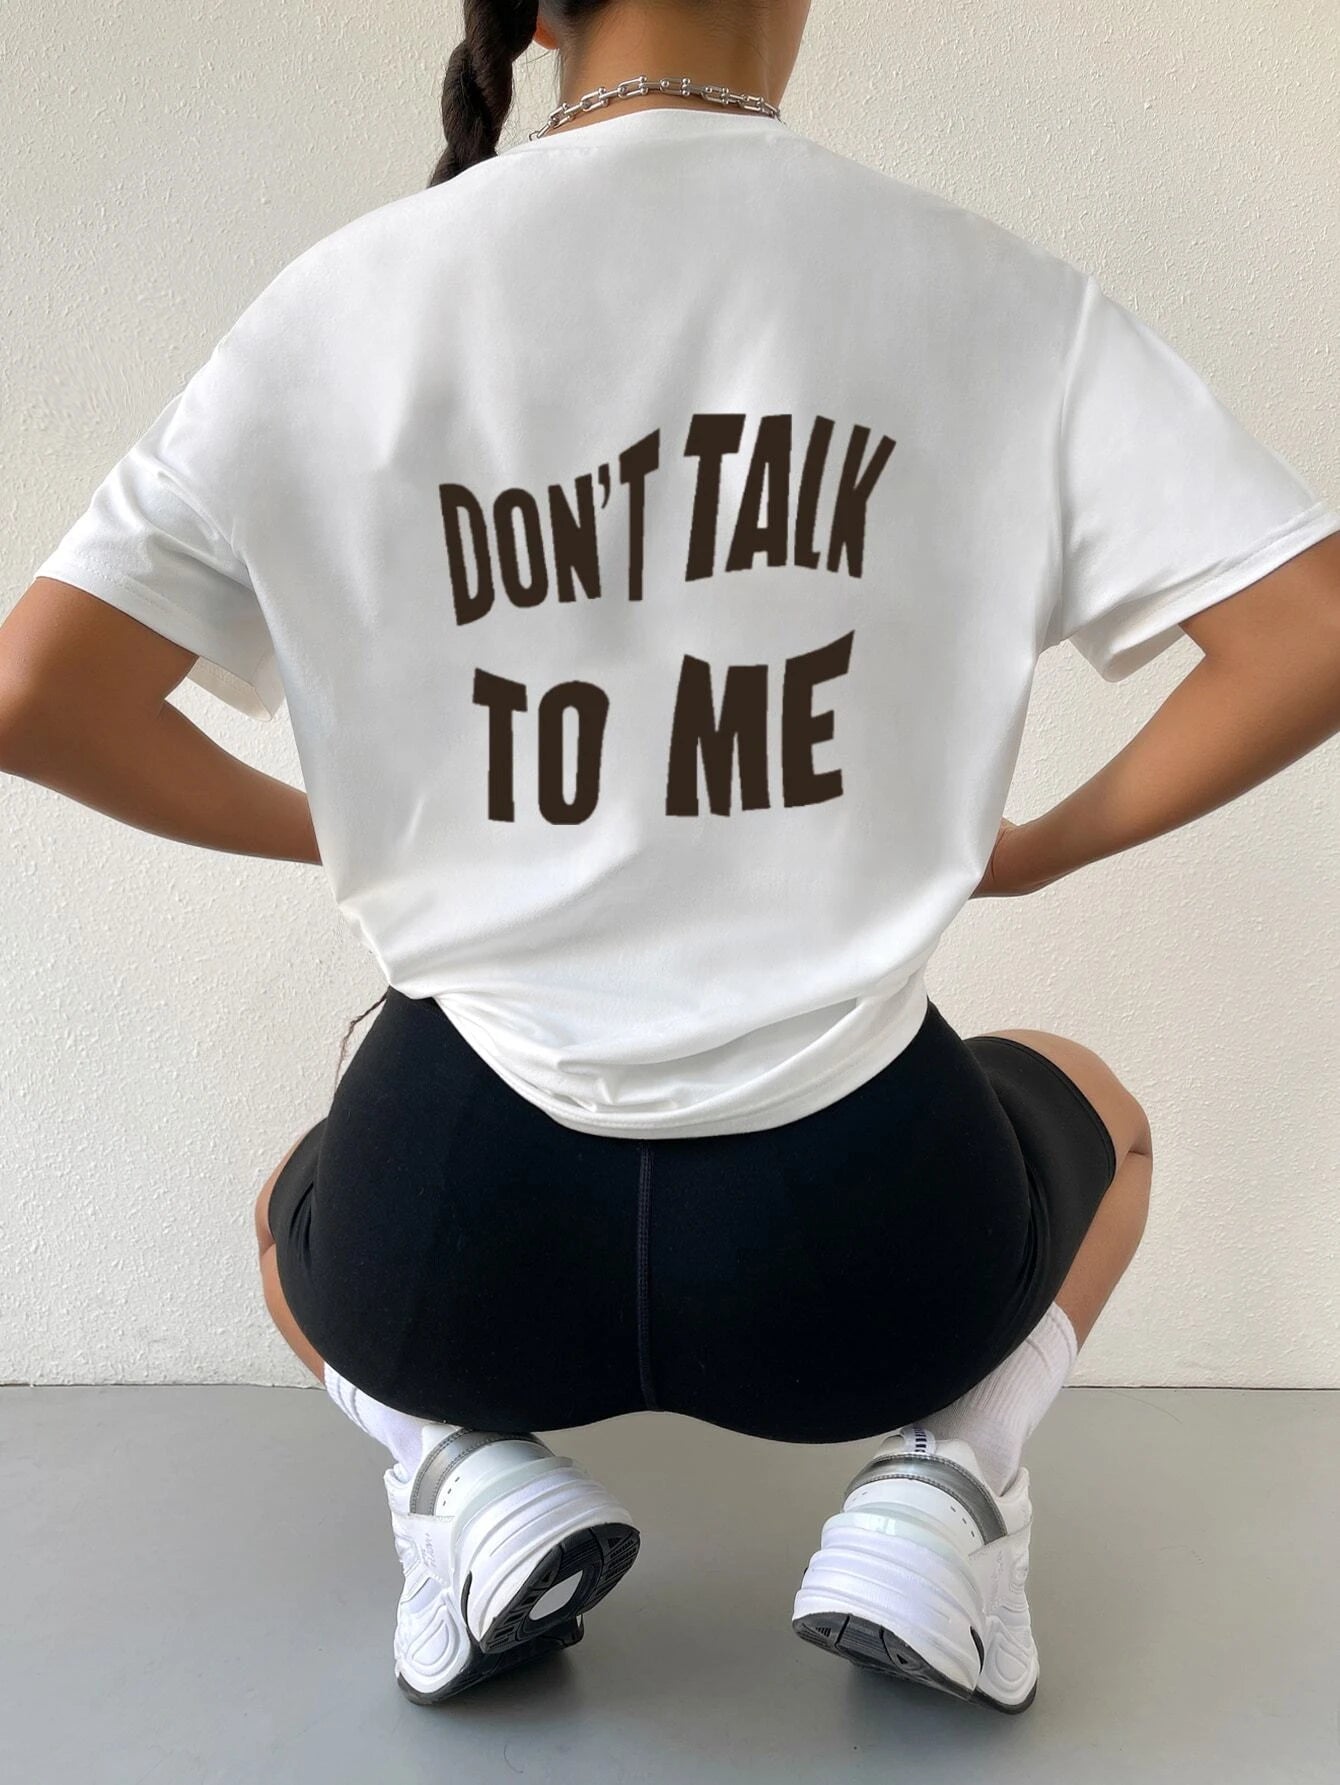 Camiseta Feminina Estilo Coreano Dont Talk to me